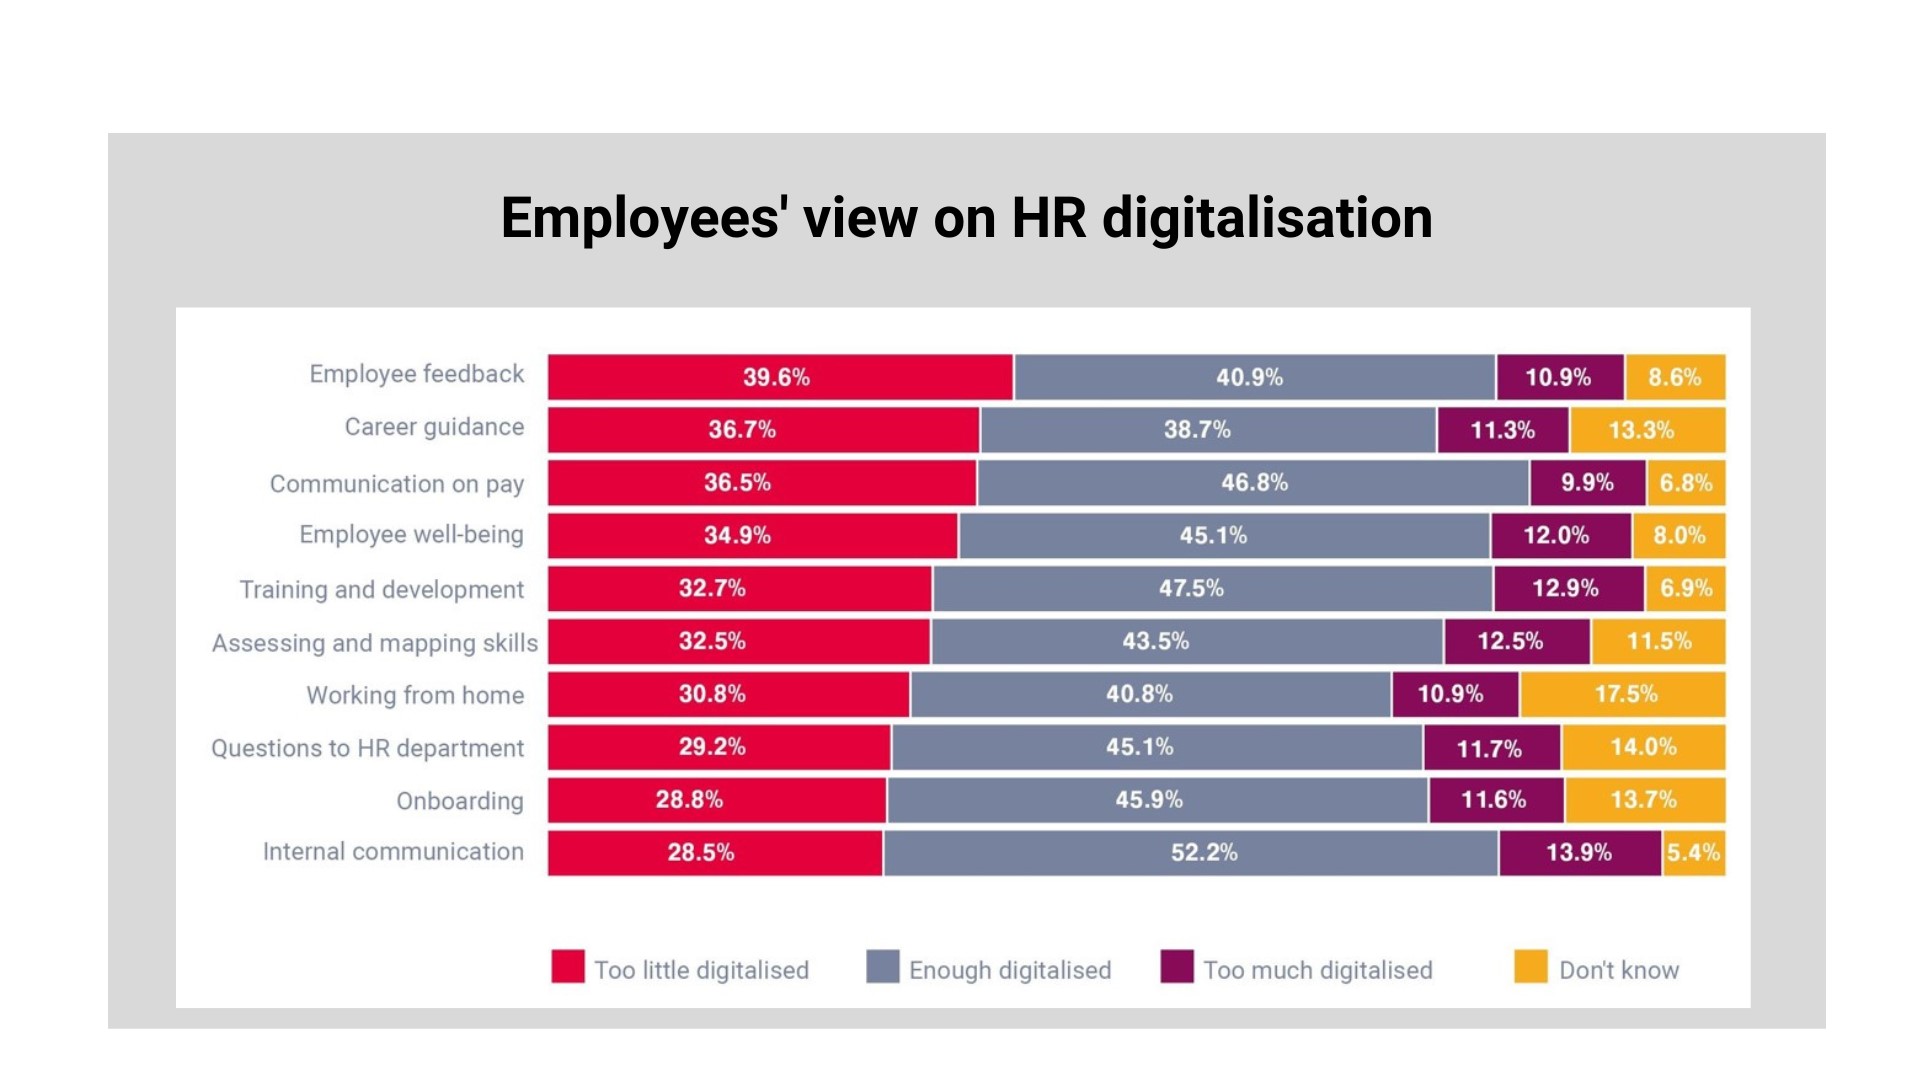 Employee's view on digitalization